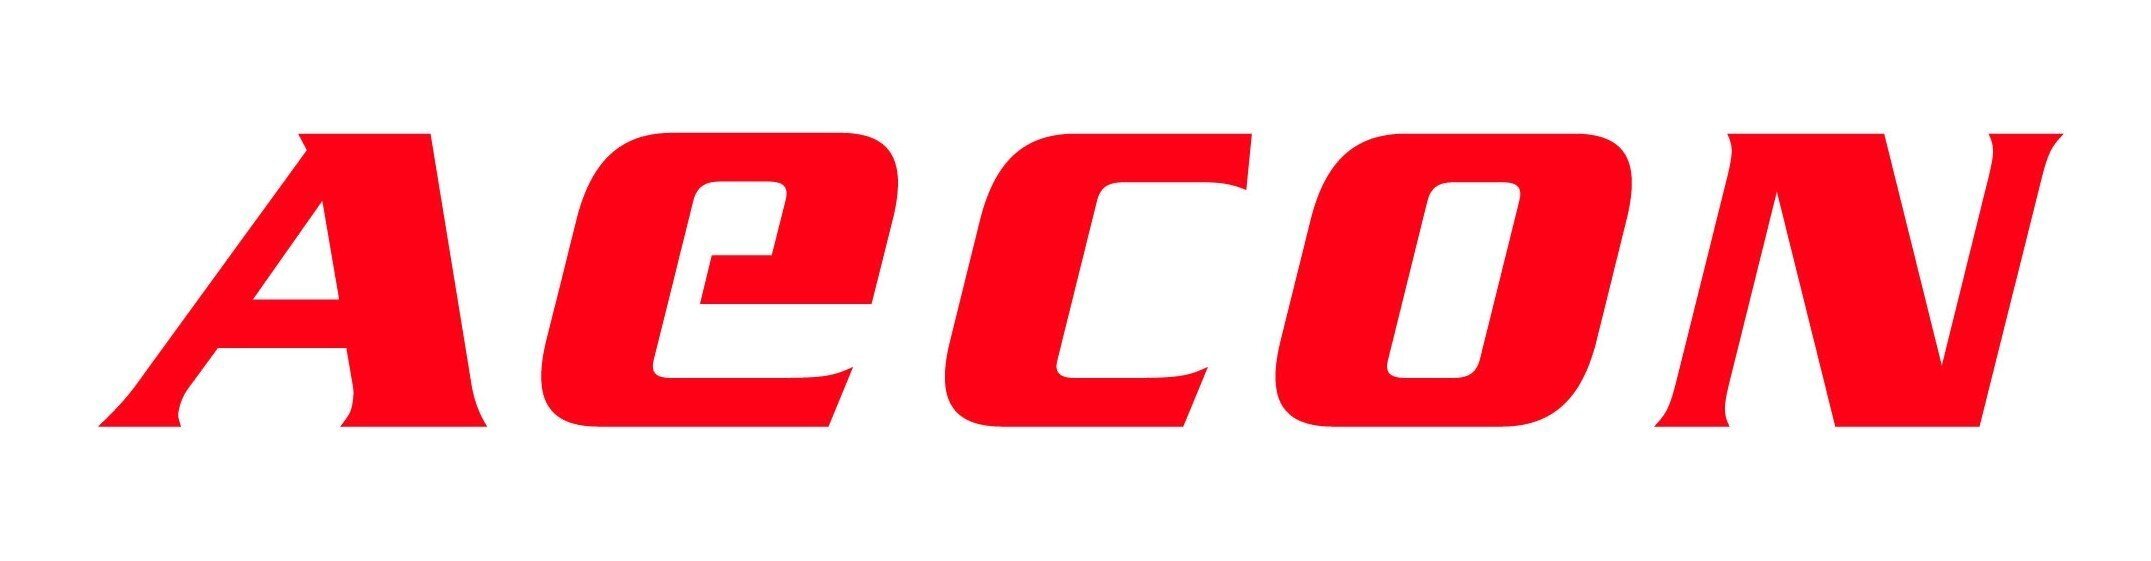 aecon logo.jpg